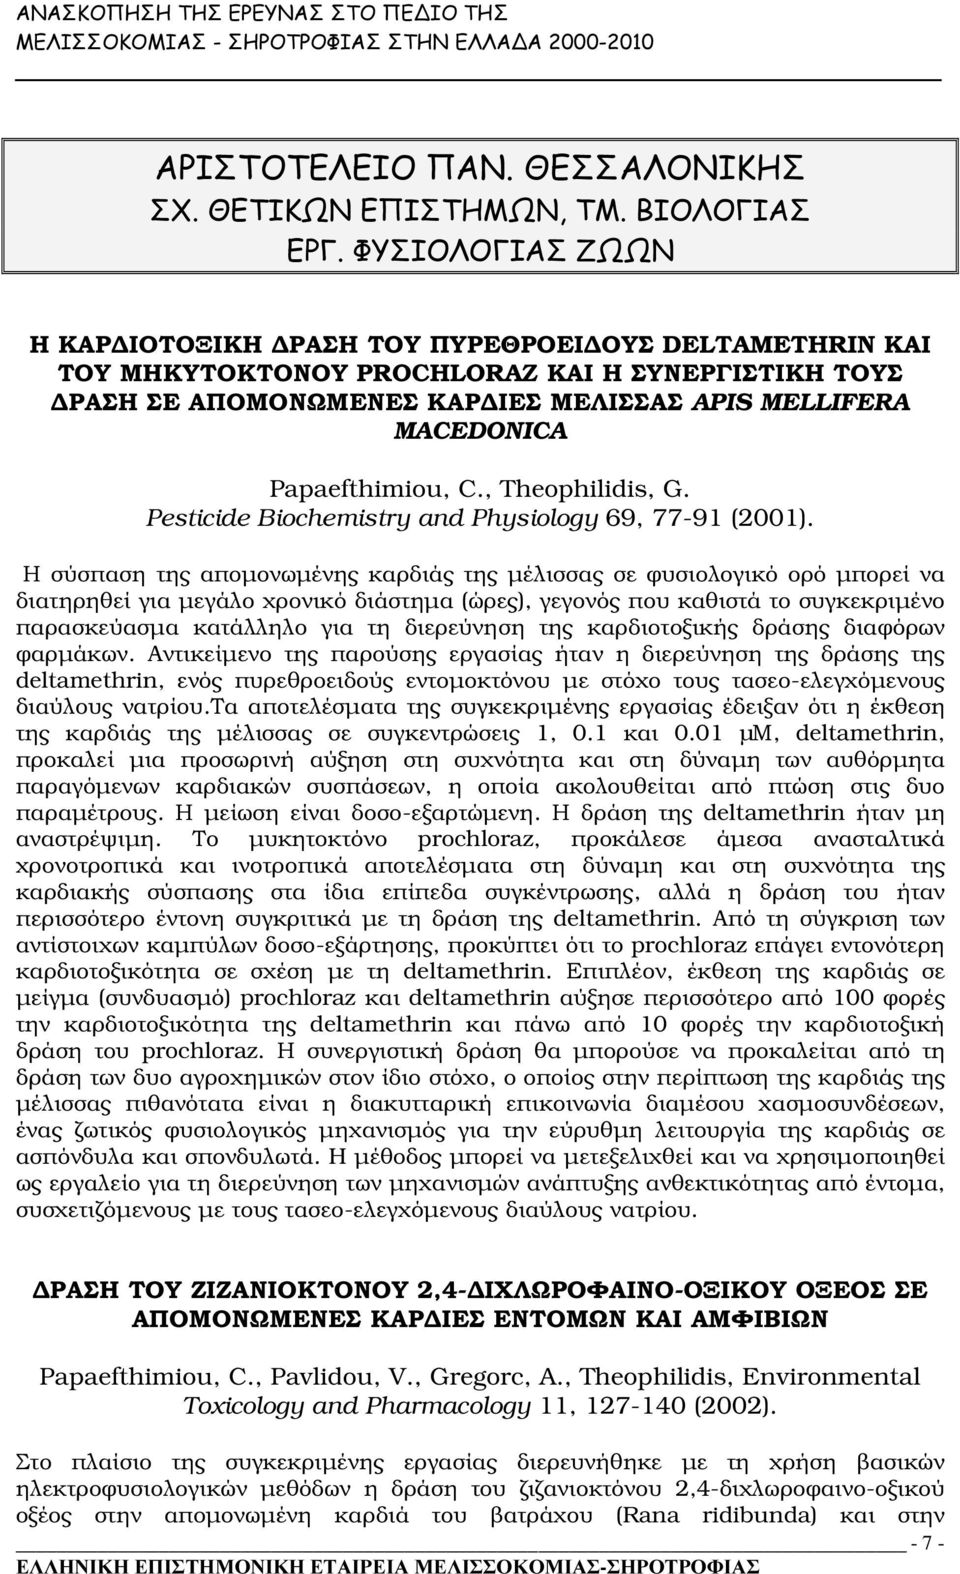 Papaefthimiou, C., Theophilidis, G. Pesticide Biochemistry and Physiology 69, 77-91 (2001).